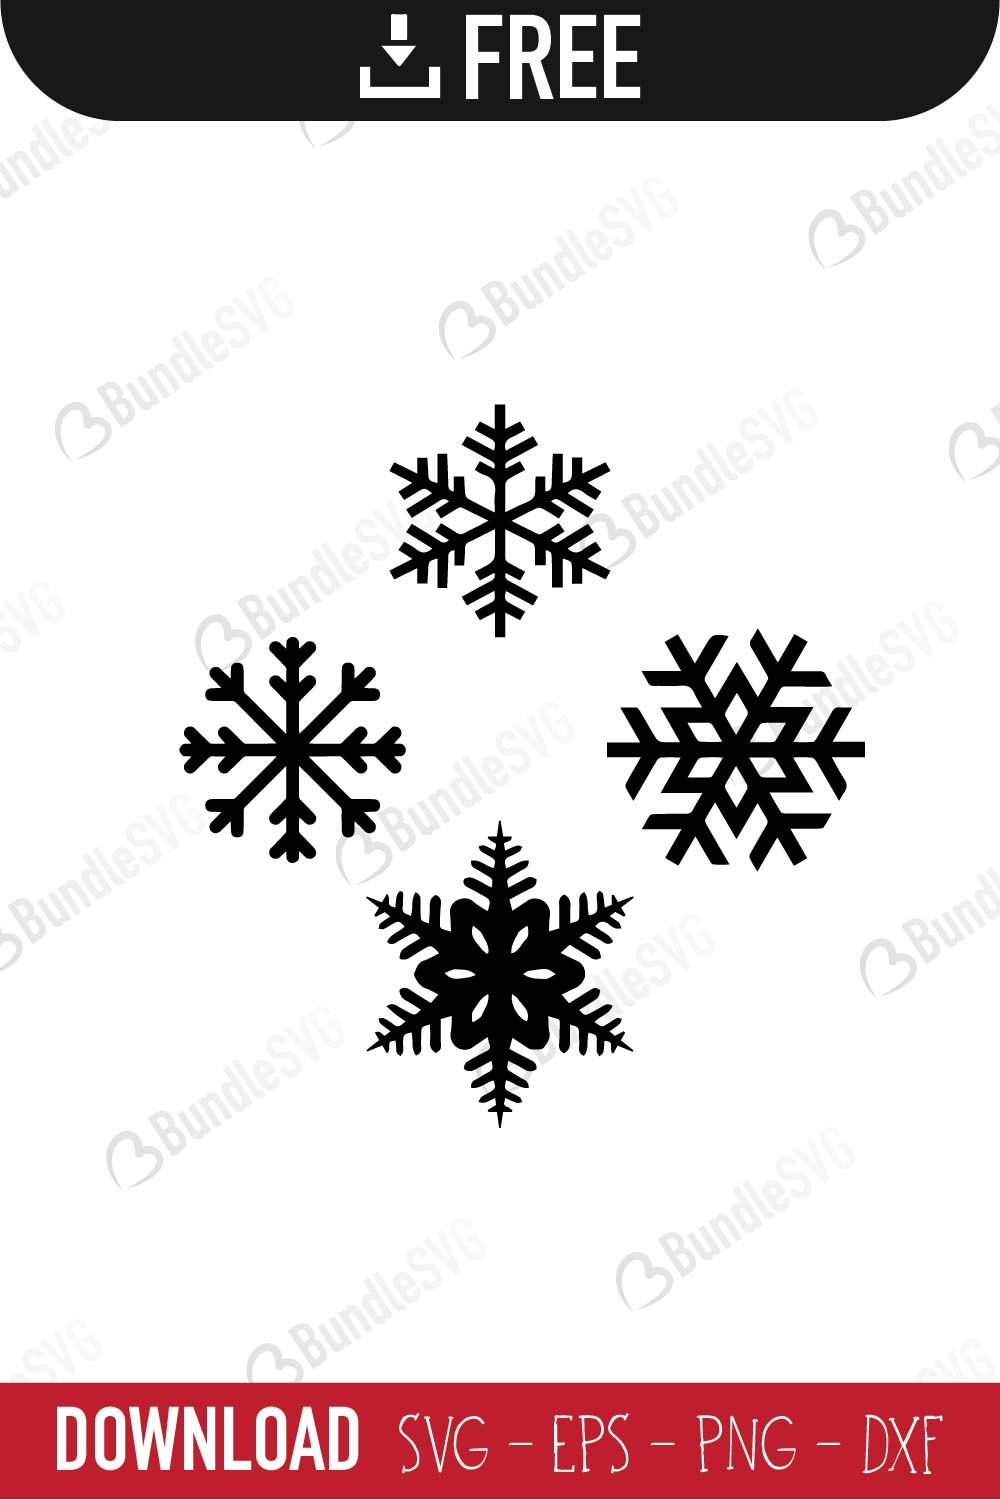 Download Free Snowflake SVG Cut Files | BundleSVG